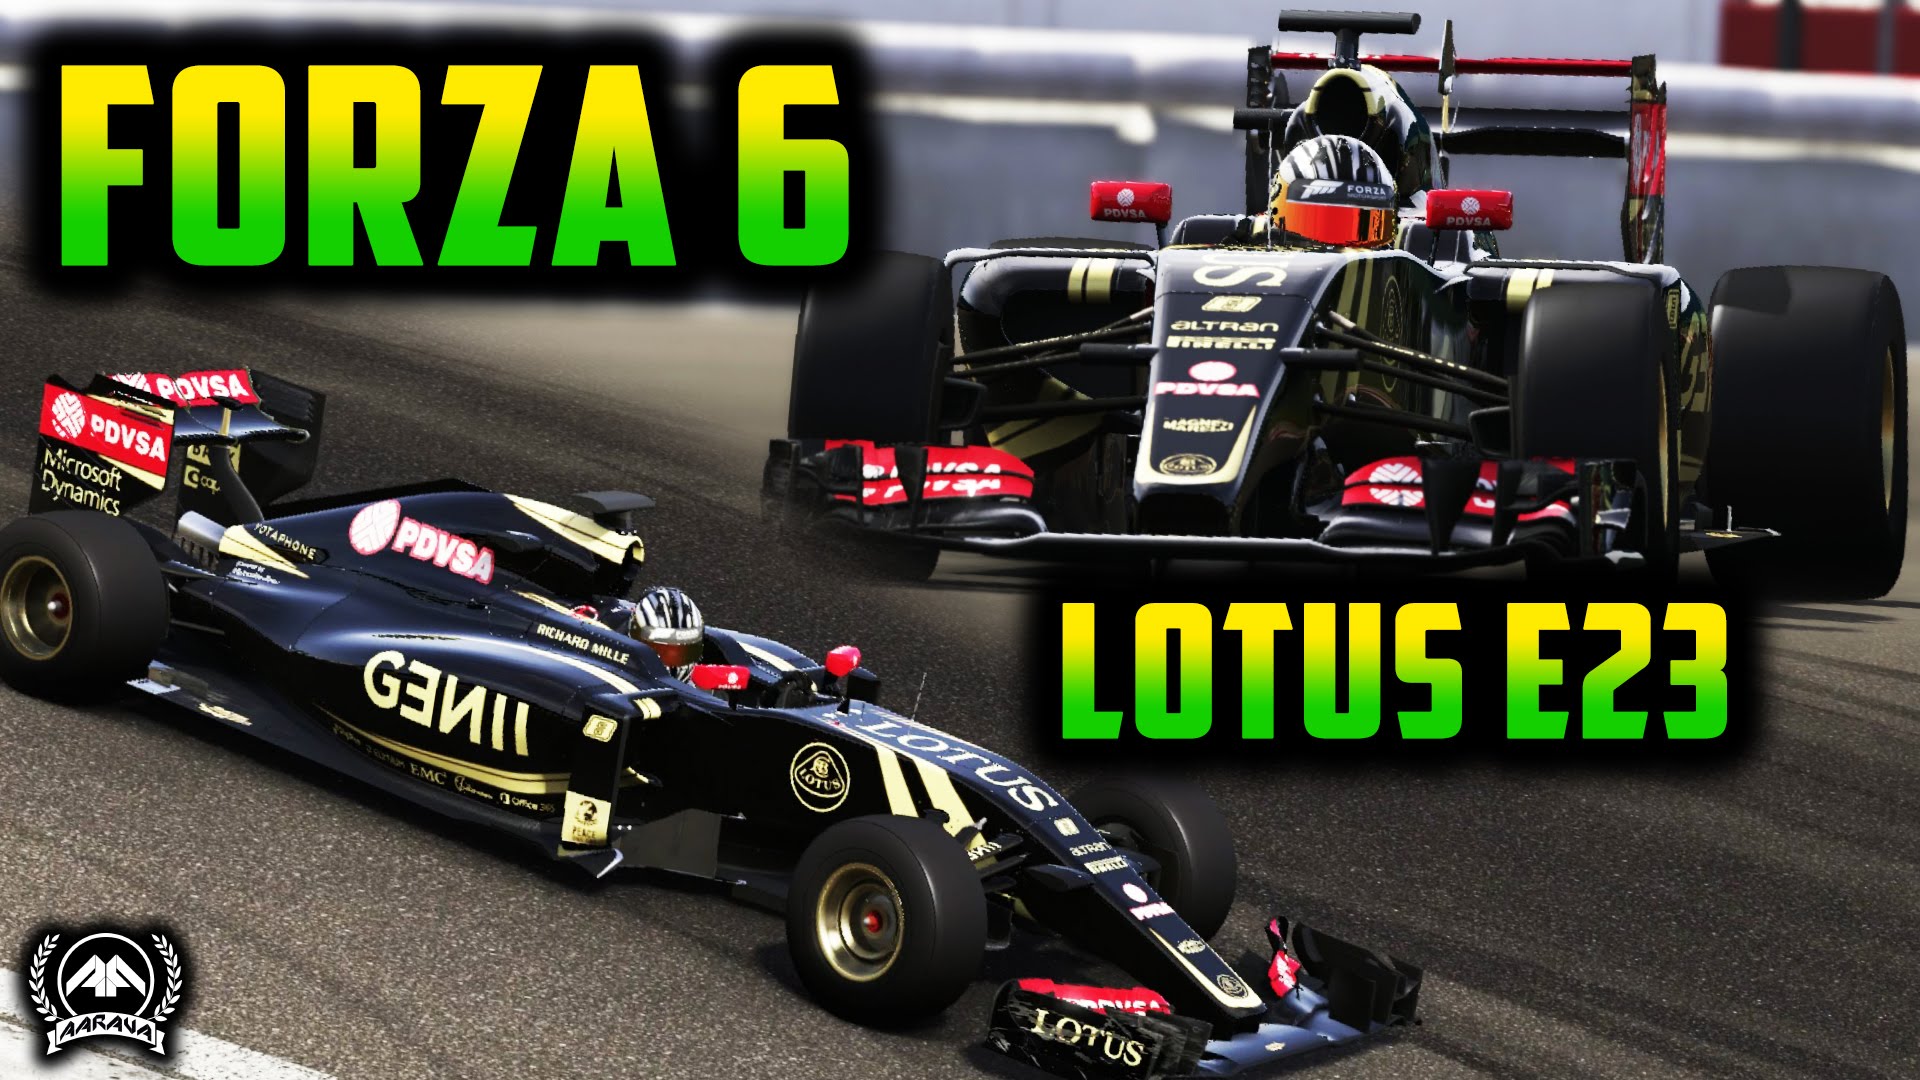 Lotus E23 Formula 1 Backgrounds on Wallpapers Vista